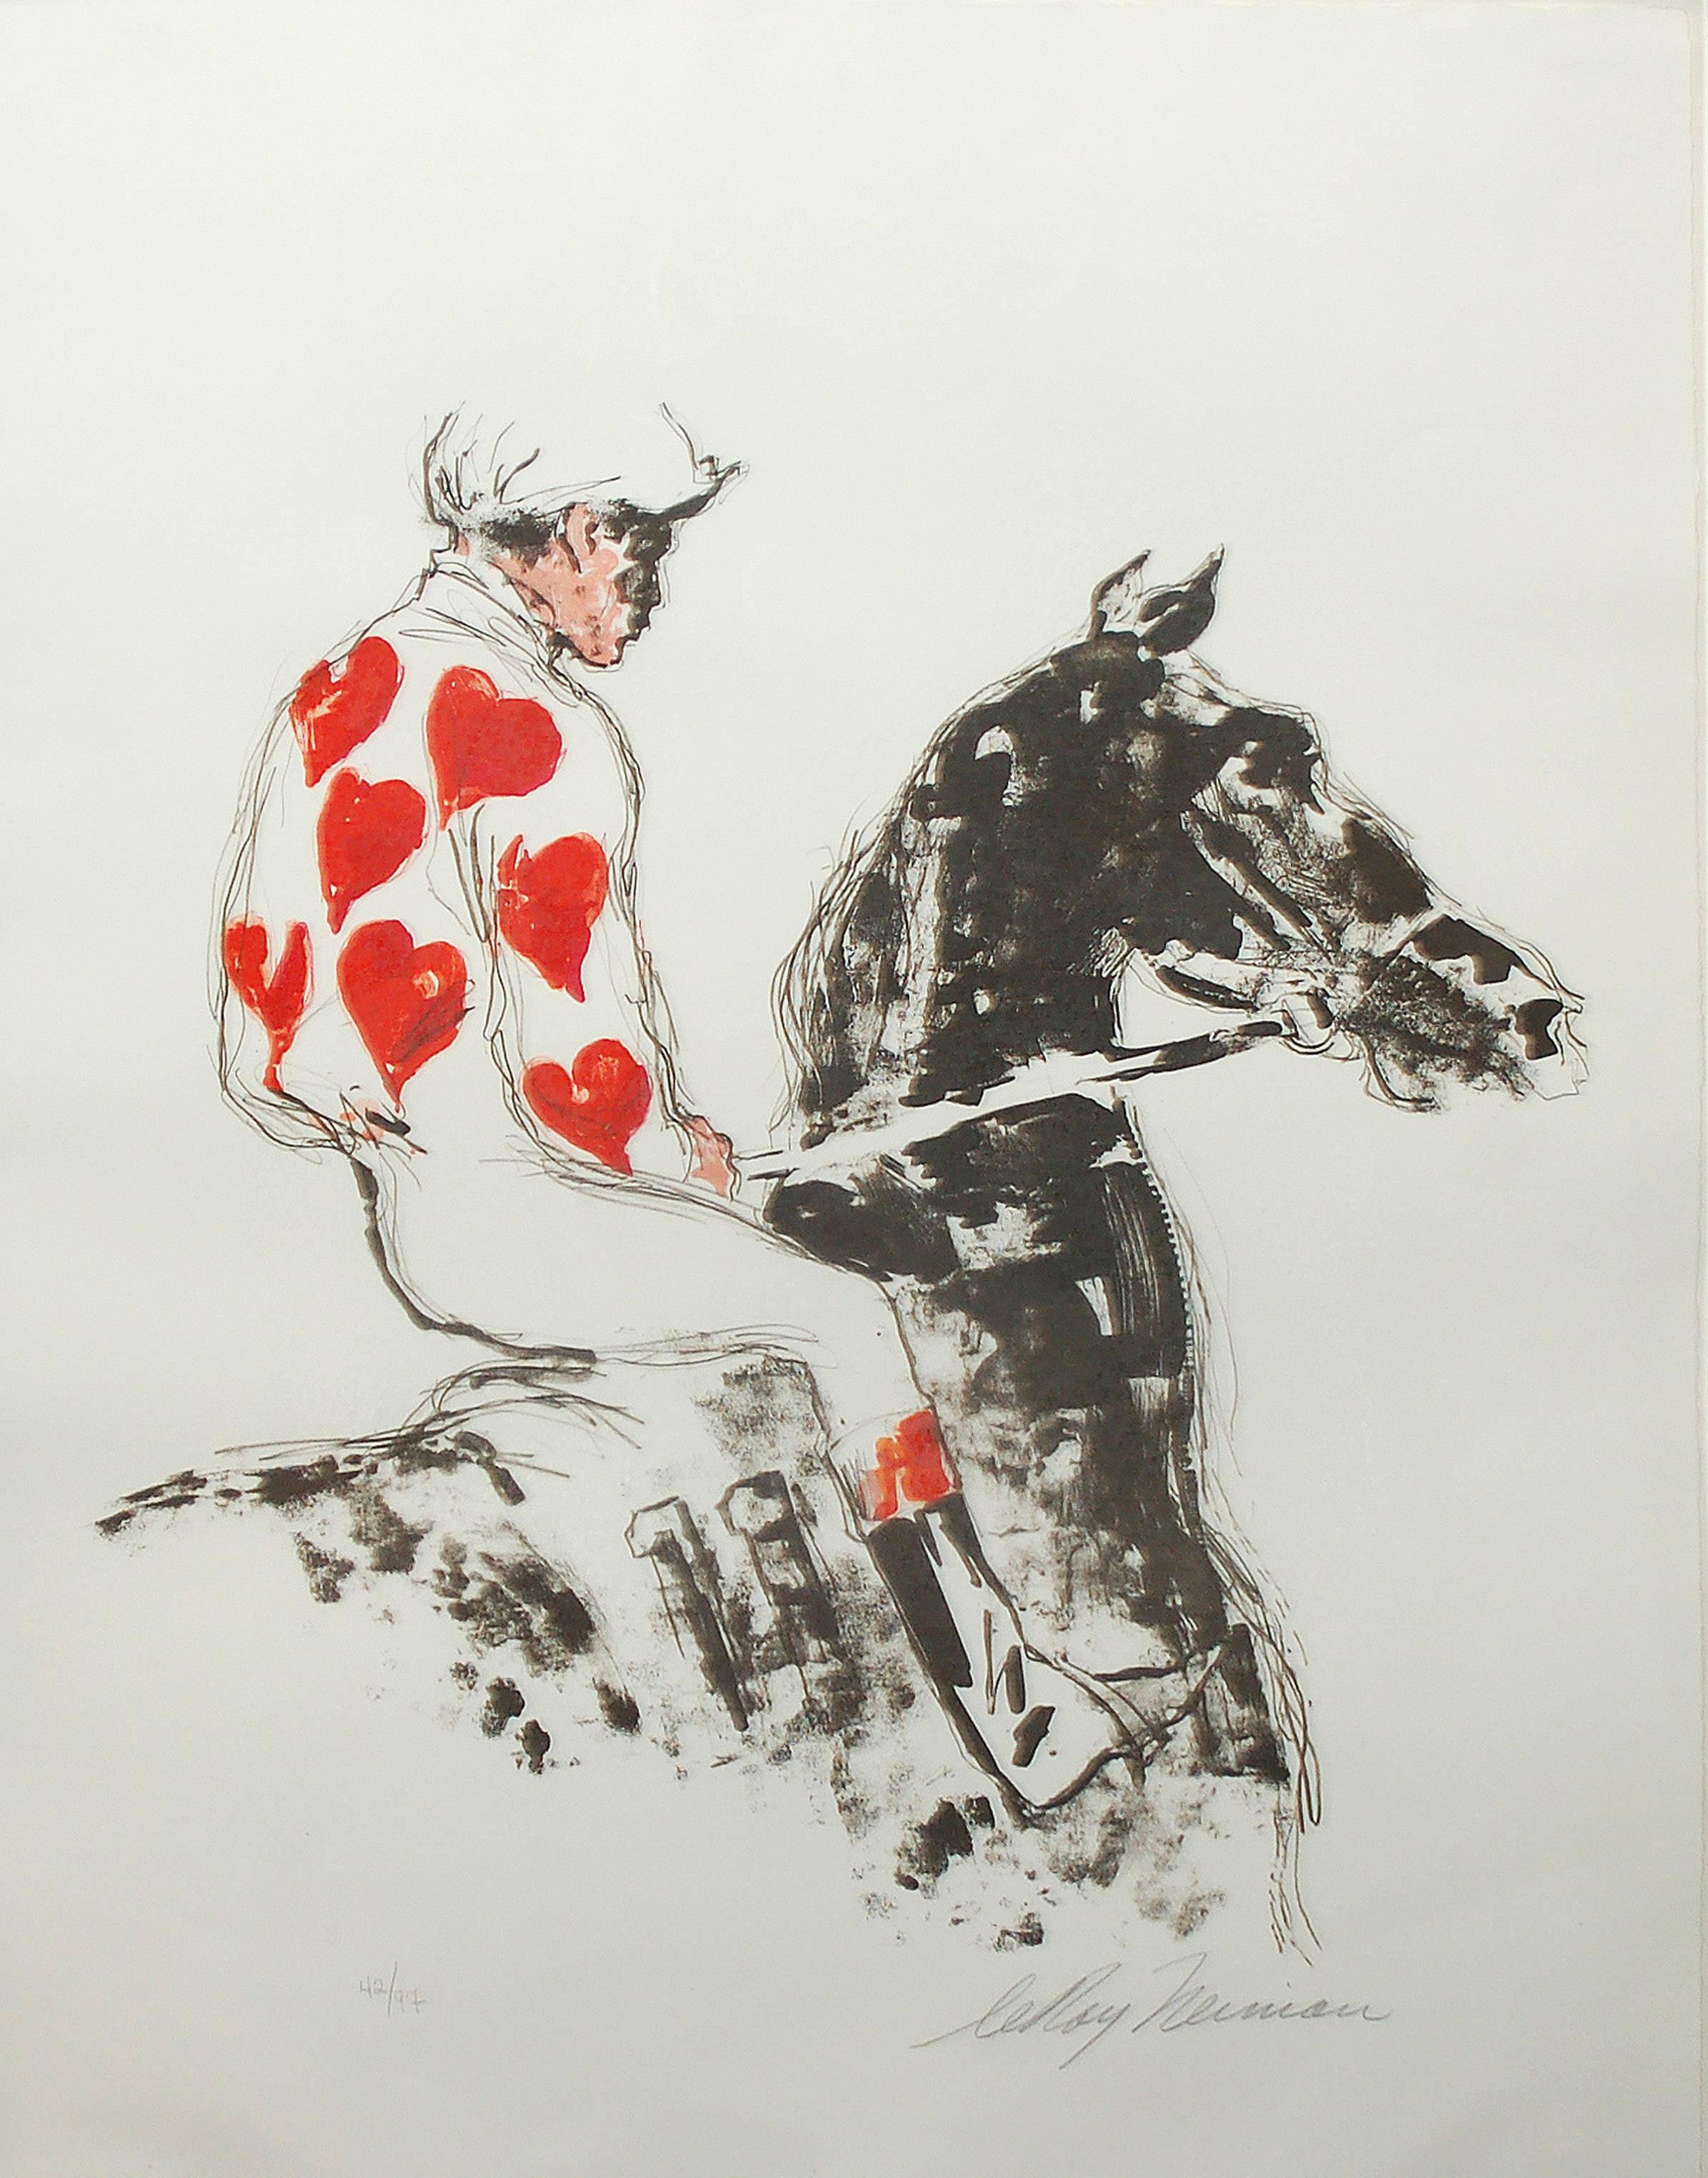 Leroy Neiman Animal Print - Jockey of Hearts